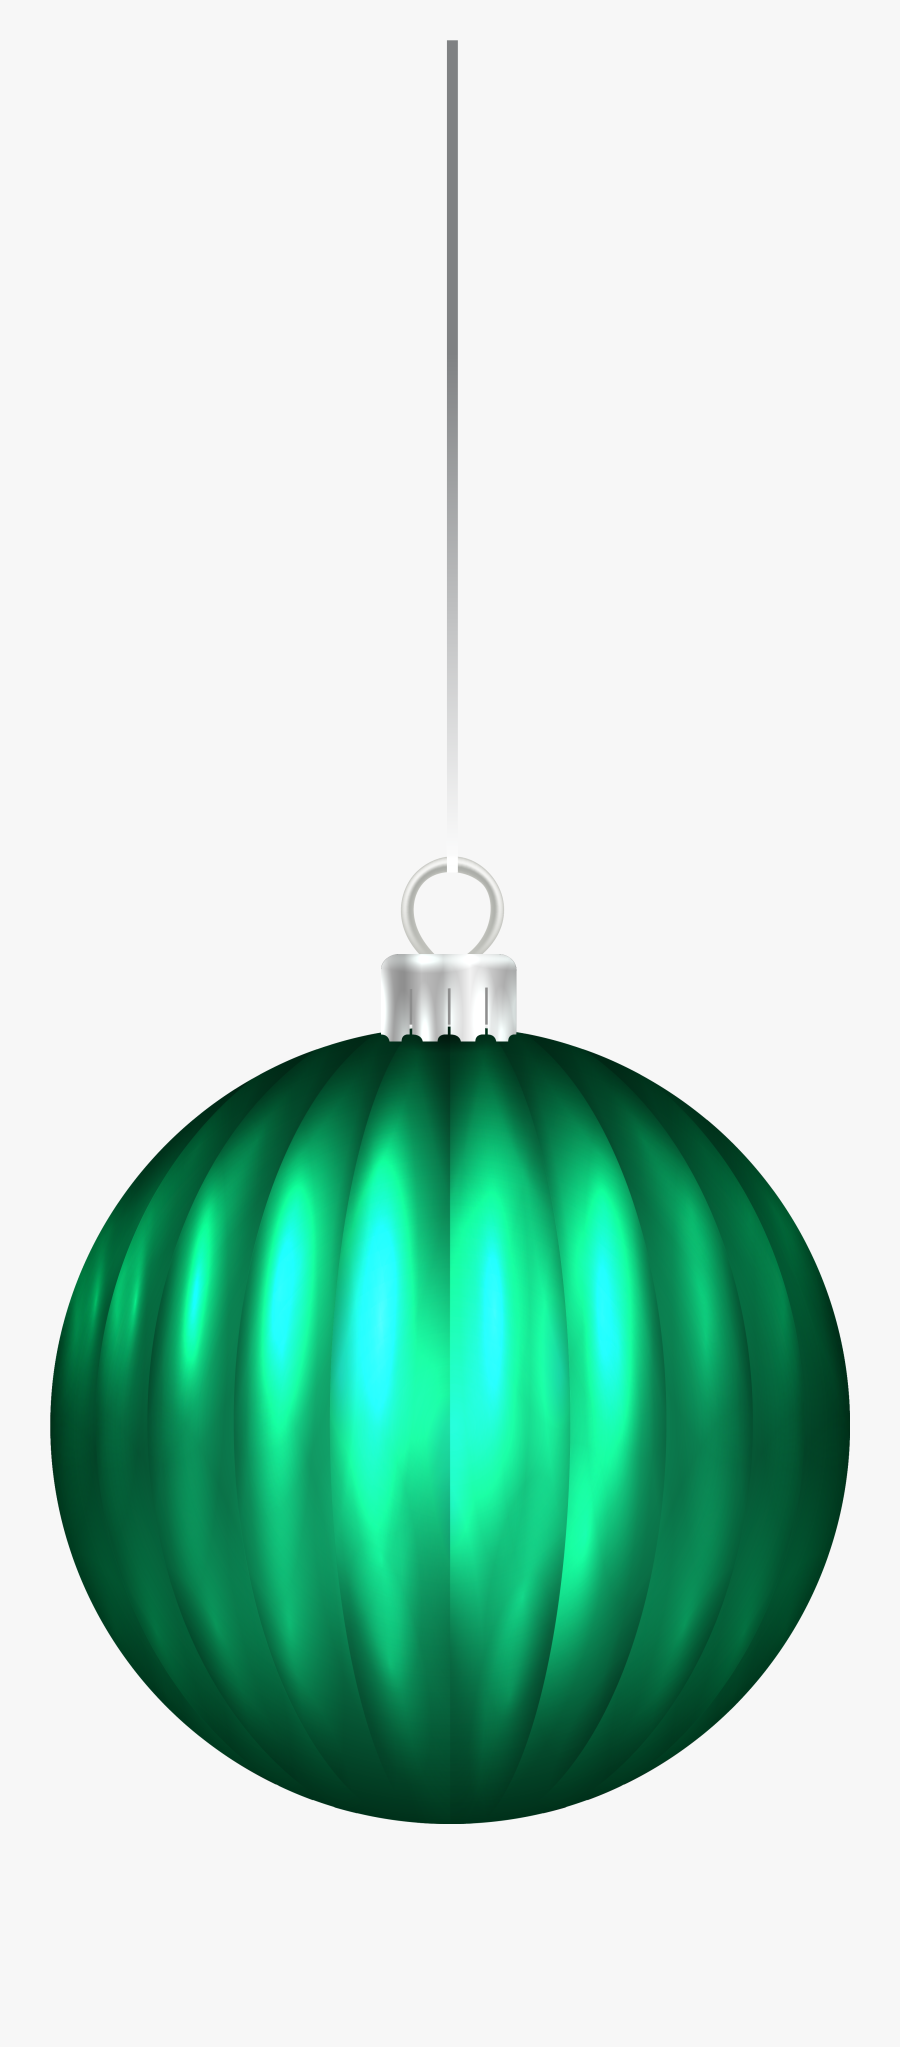 Green Christmas Ball Ornament Png Clip Art Imageu200b - Prohibido Fumar, Transparent Clipart